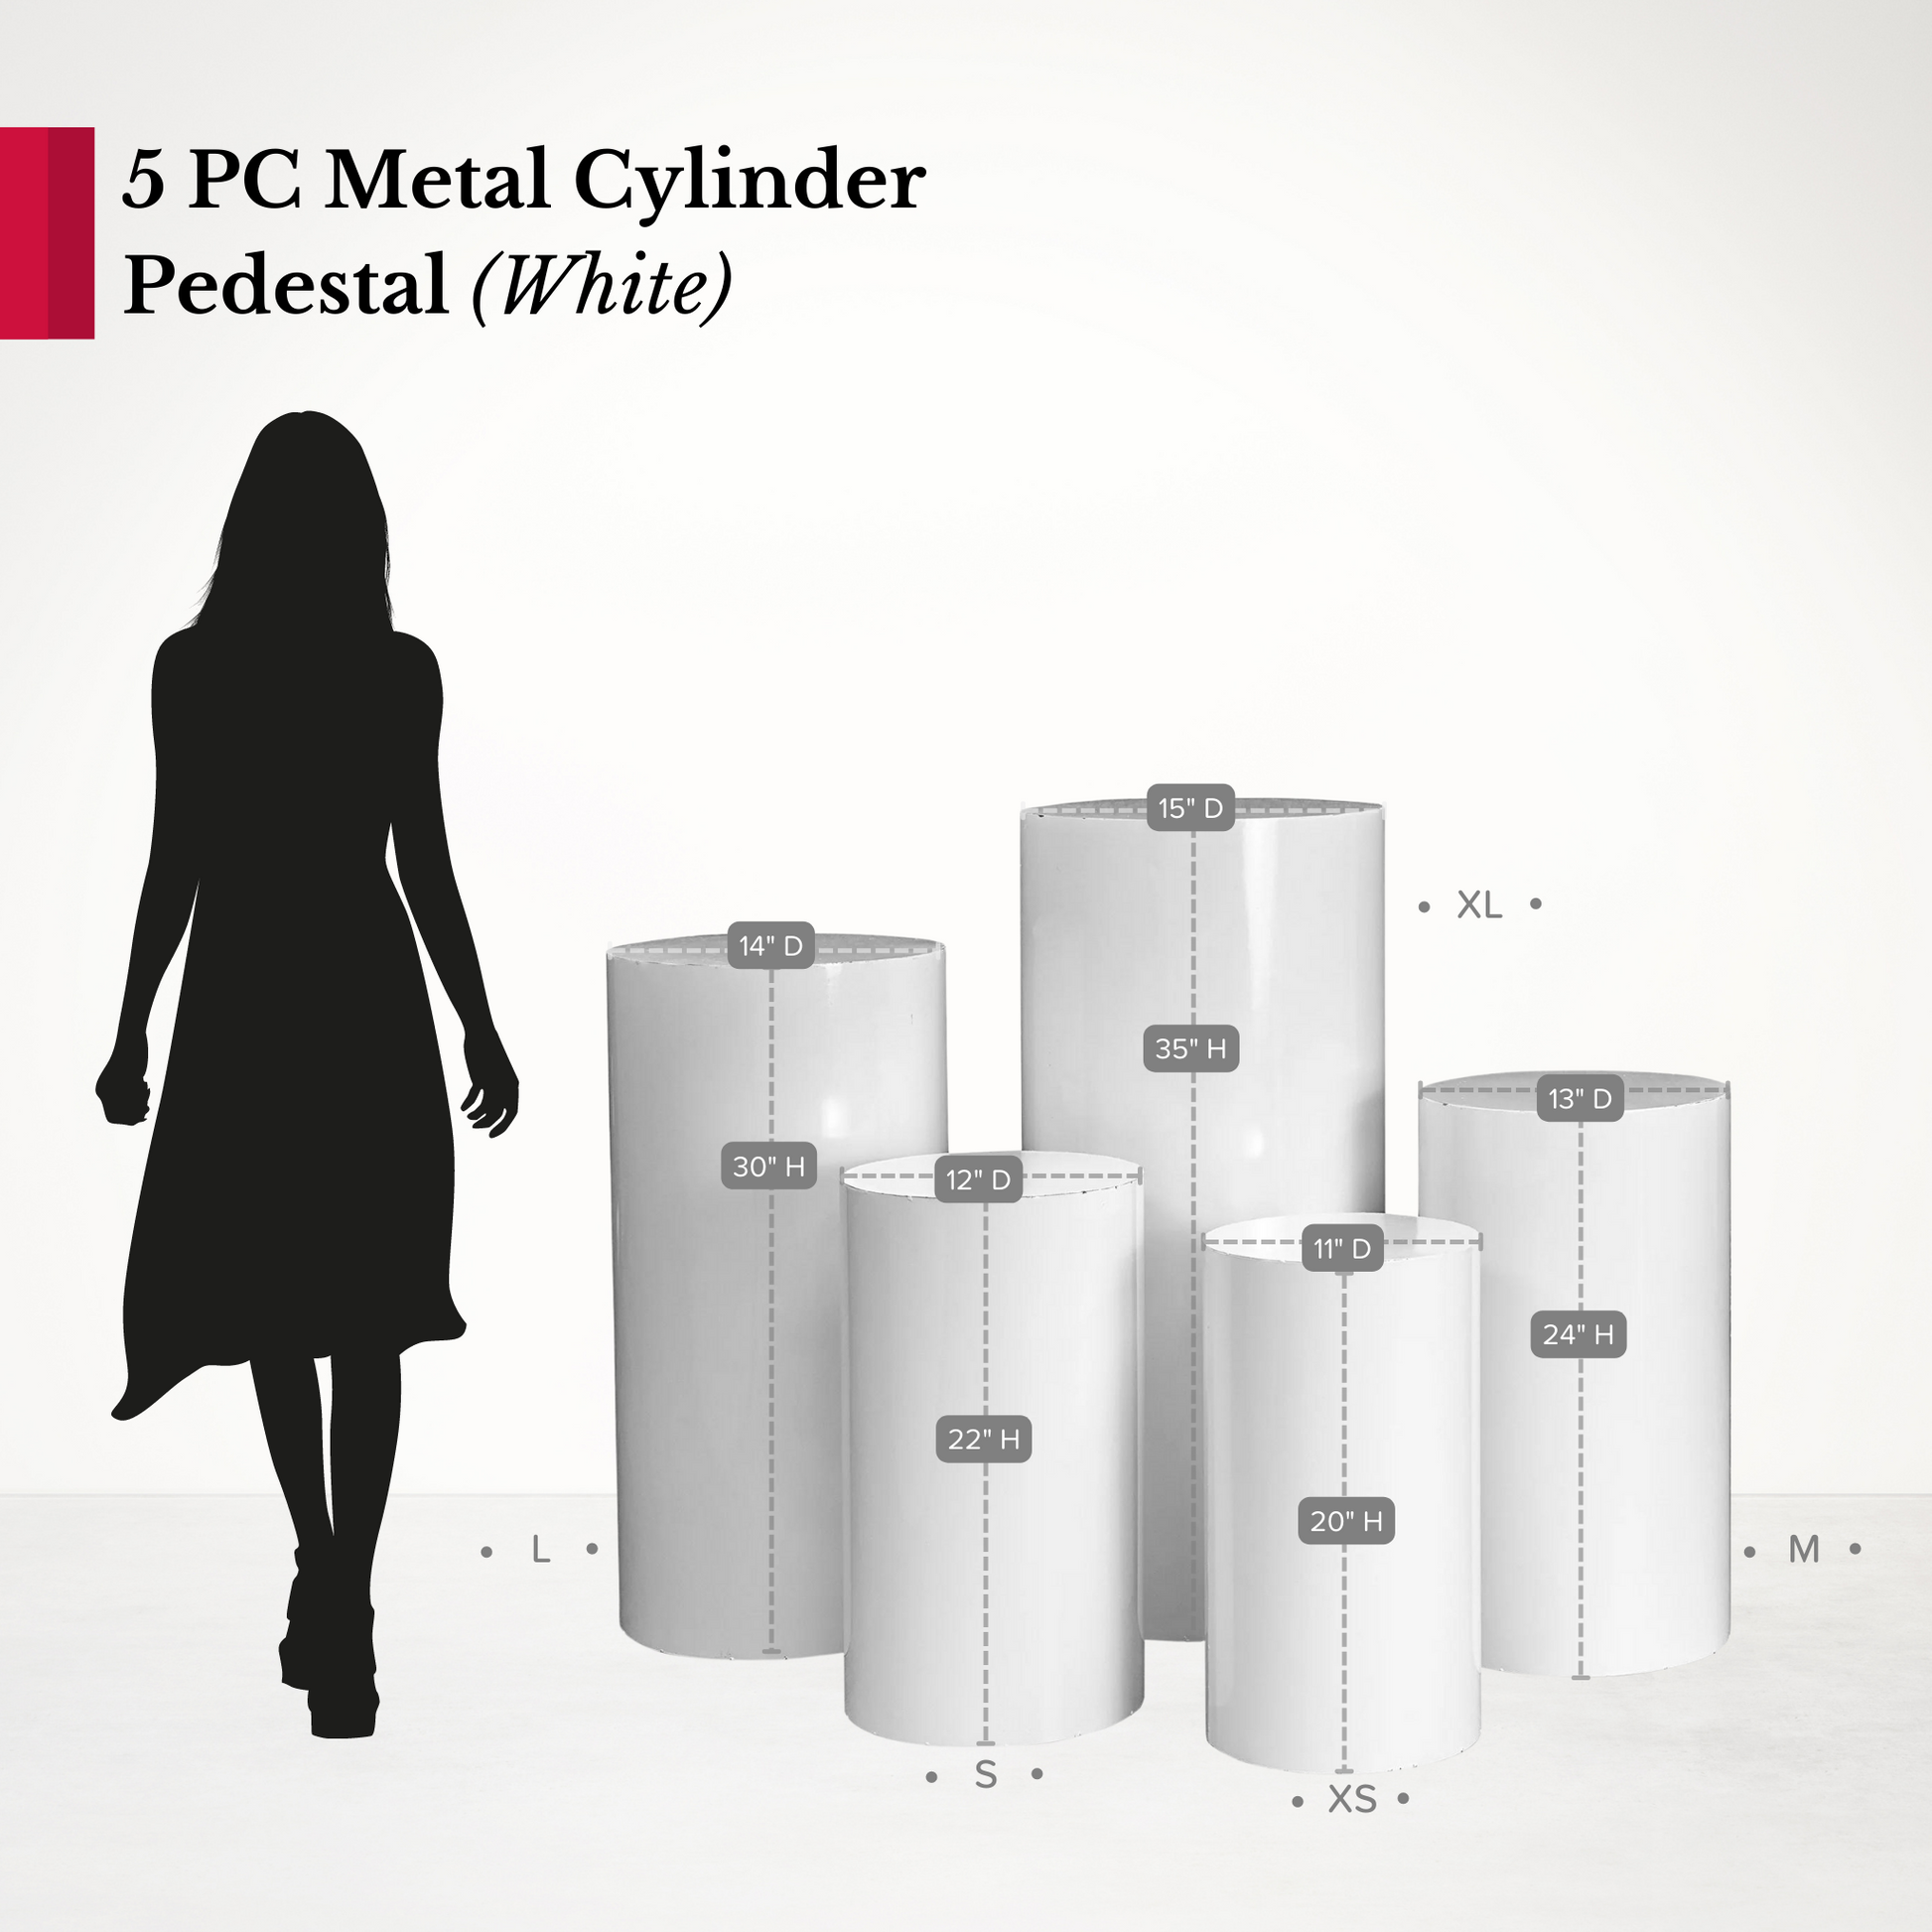 Metal Cylinder Pedestal Display Stands 5 pcs/set - White